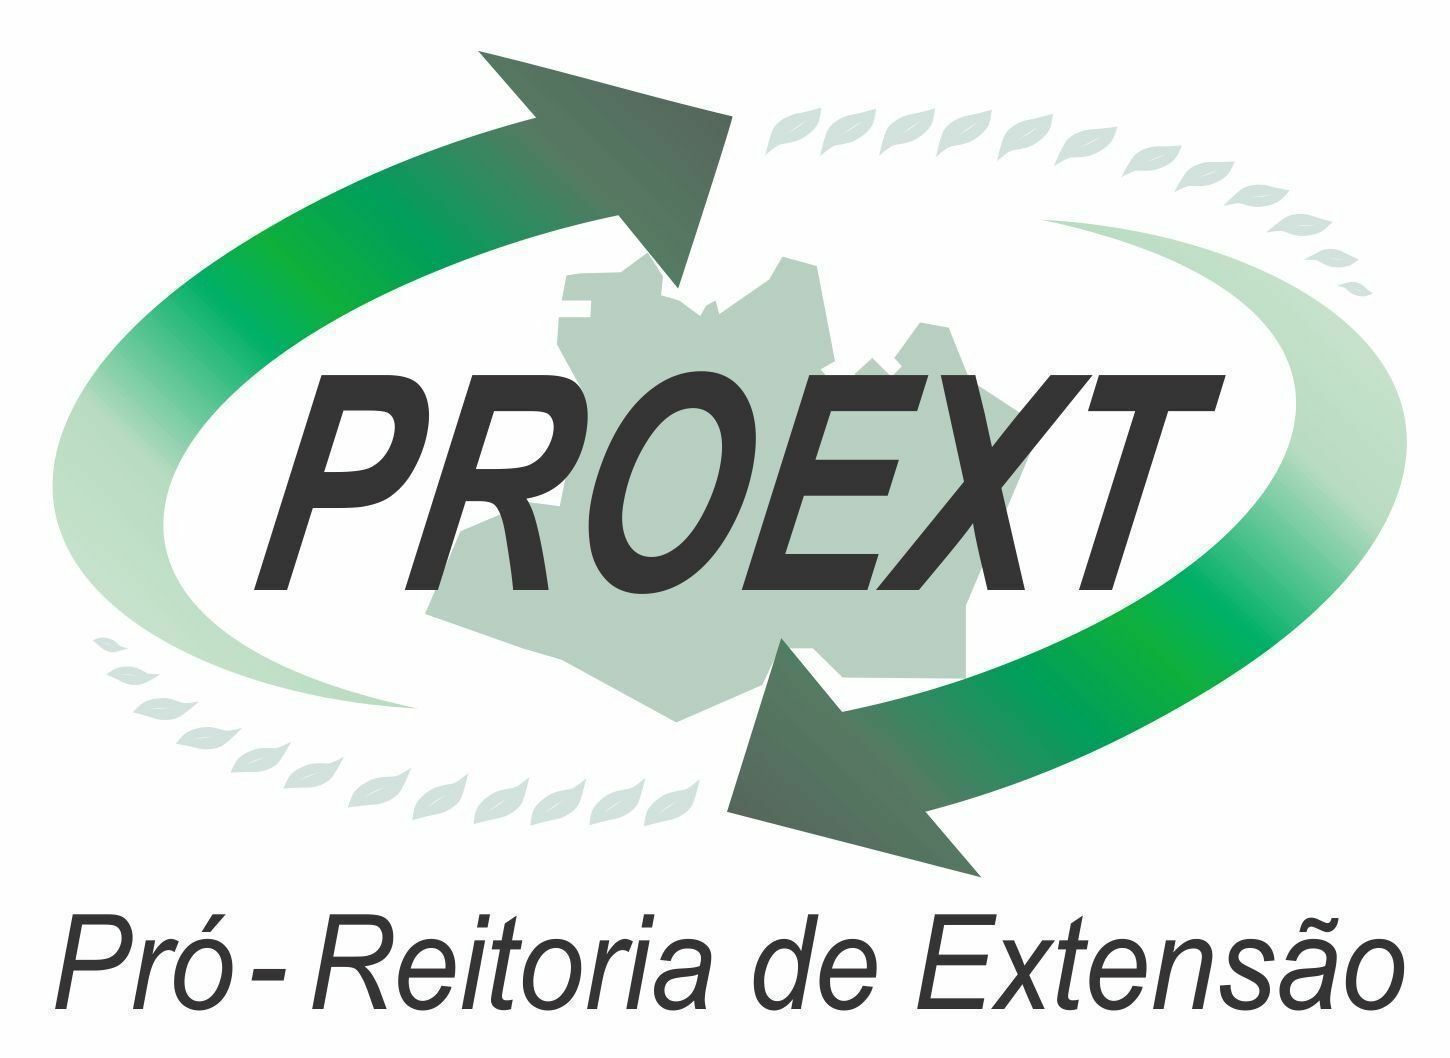 EDITAL PIBEX/PROEX Nº 01/2022 — UNIVASF Universidade Federal do